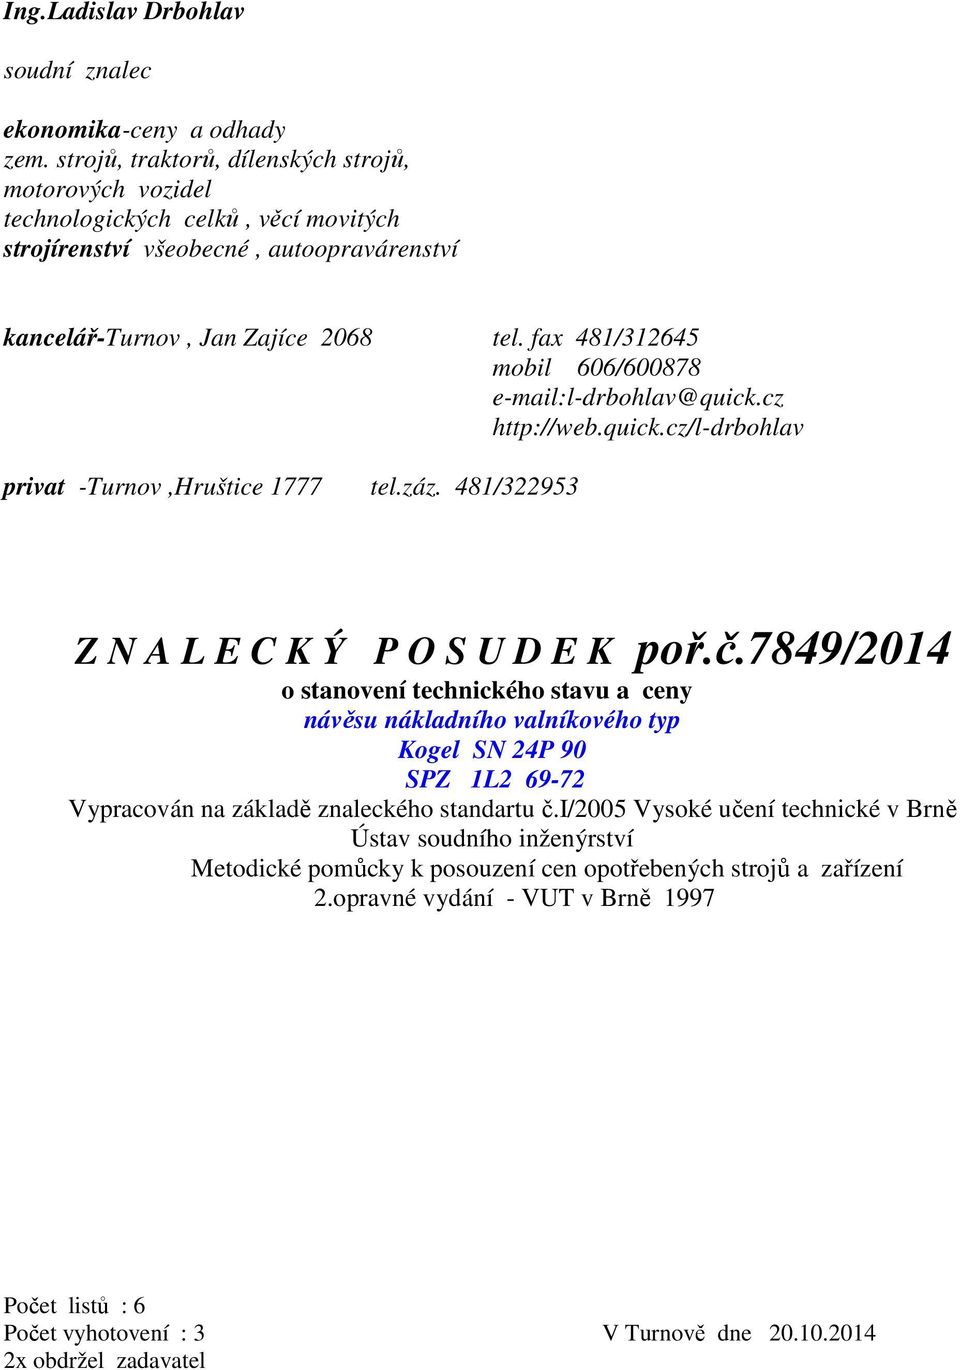 fax 481/312645 mobil 606/600878 e-mail:l-drbohlav@quick.cz http://web.quick.cz/l-drbohlav privat -Turnov,Hruštice 1777 tel.záz. 481/322953 Z N A L E C K Ý P O S U D E K poř.č.